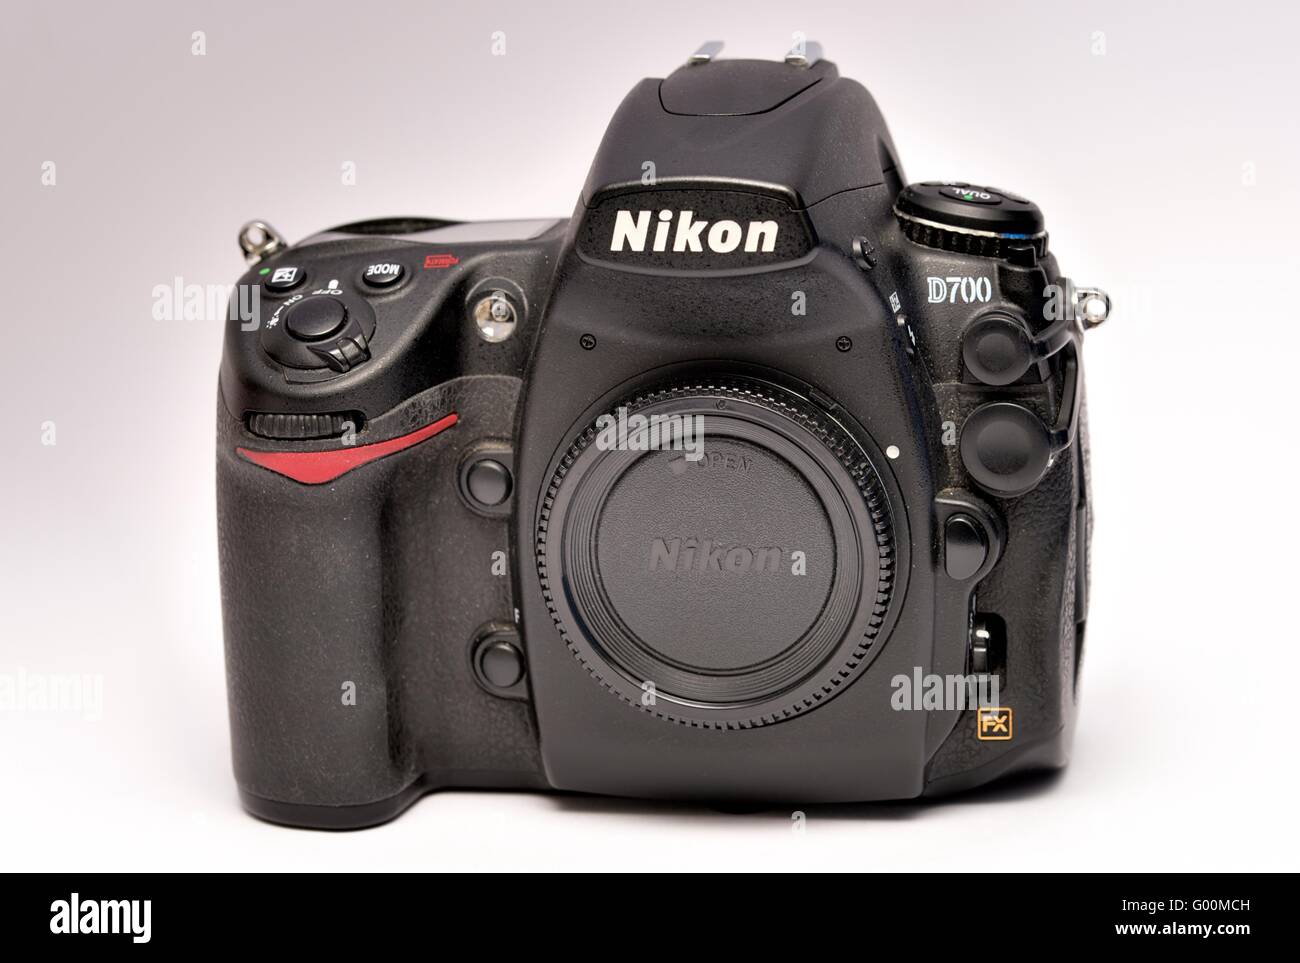 Nikon d700 hi-res stock photography and images - Alamy